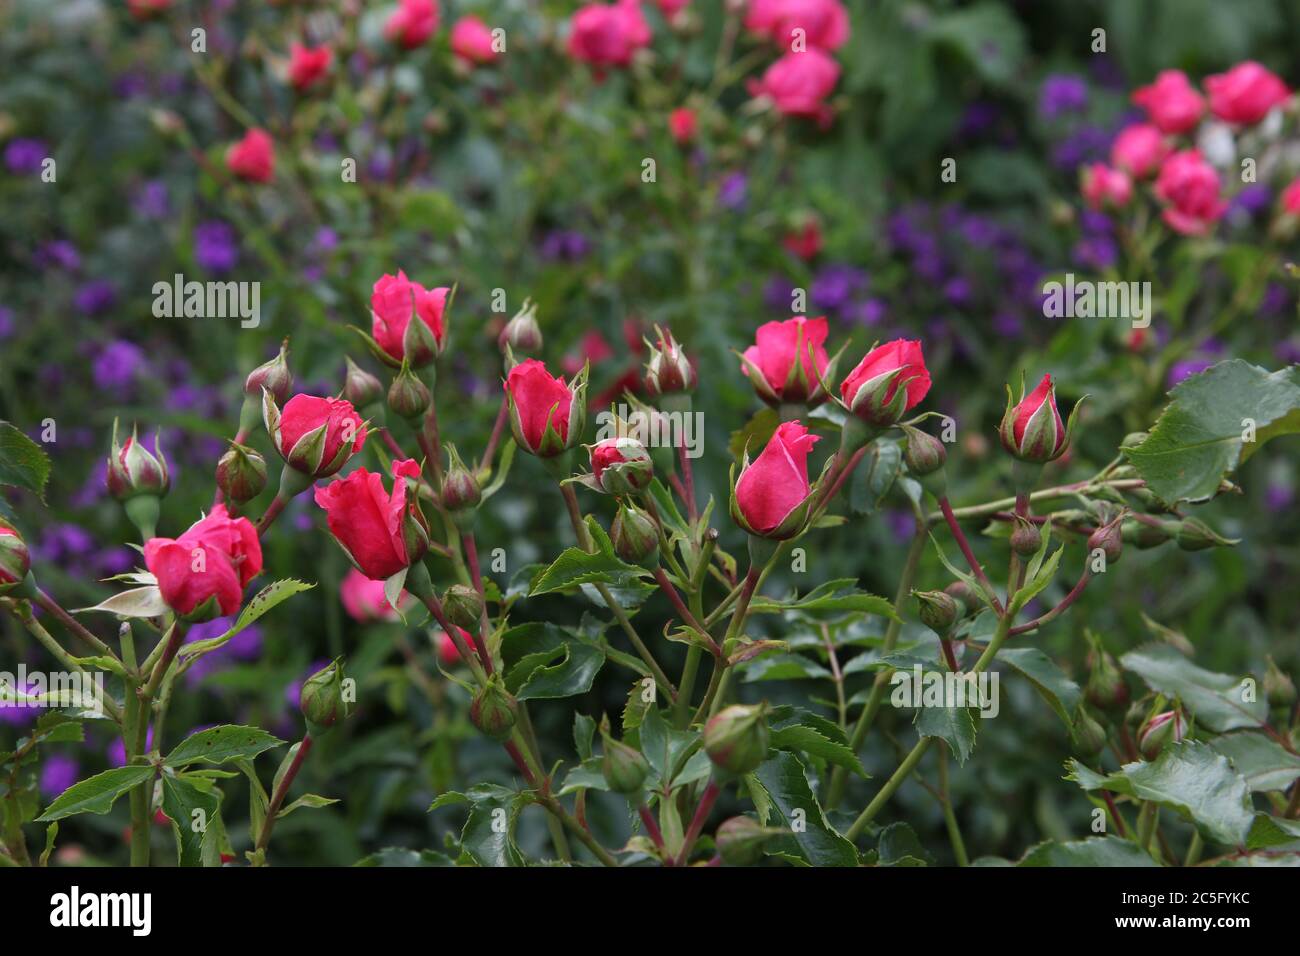 Rosa Rosen, rosa Rosenknospen auf einer Wiese. Stockfoto